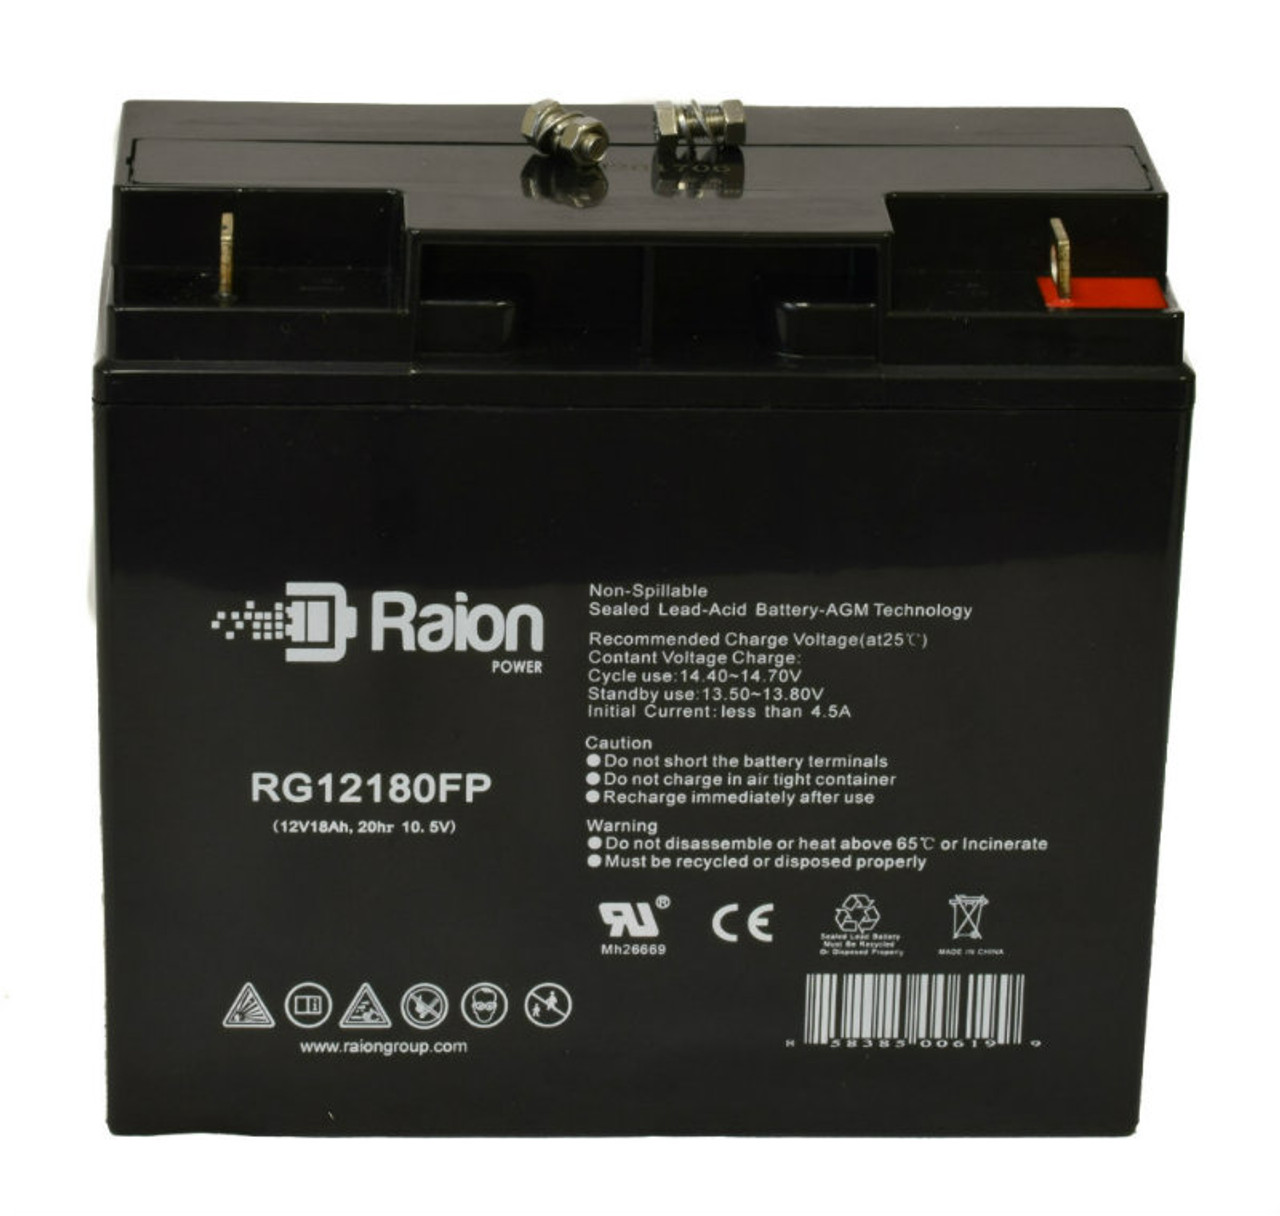 Raion Power RG12180FP 12V 18Ah Lead Acid Battery for Consent Battery GS1220